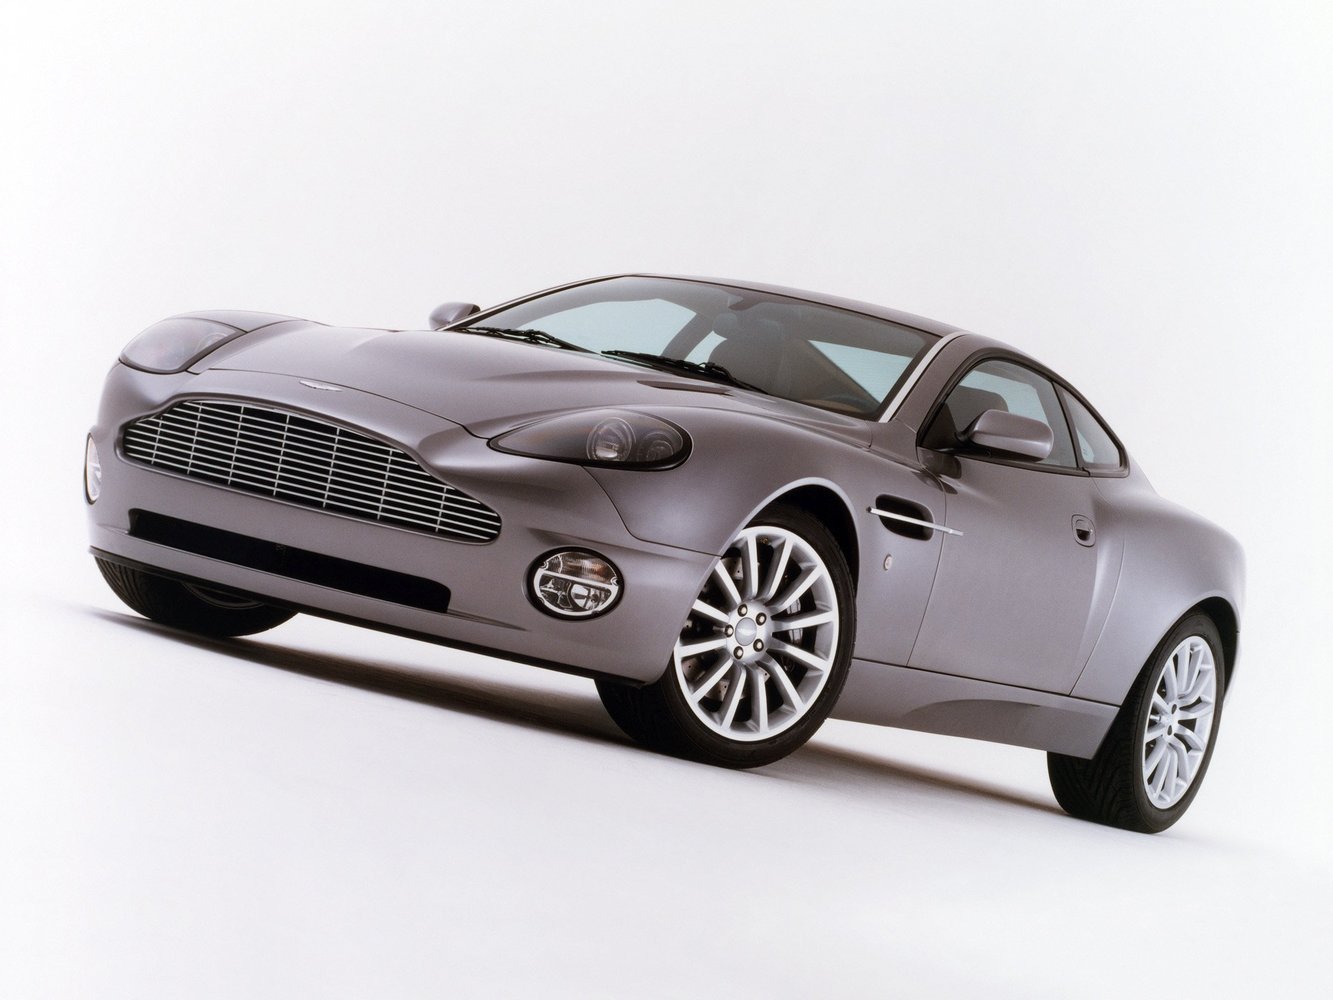 Aston Martin V12 Vanquish 2001 - 2007